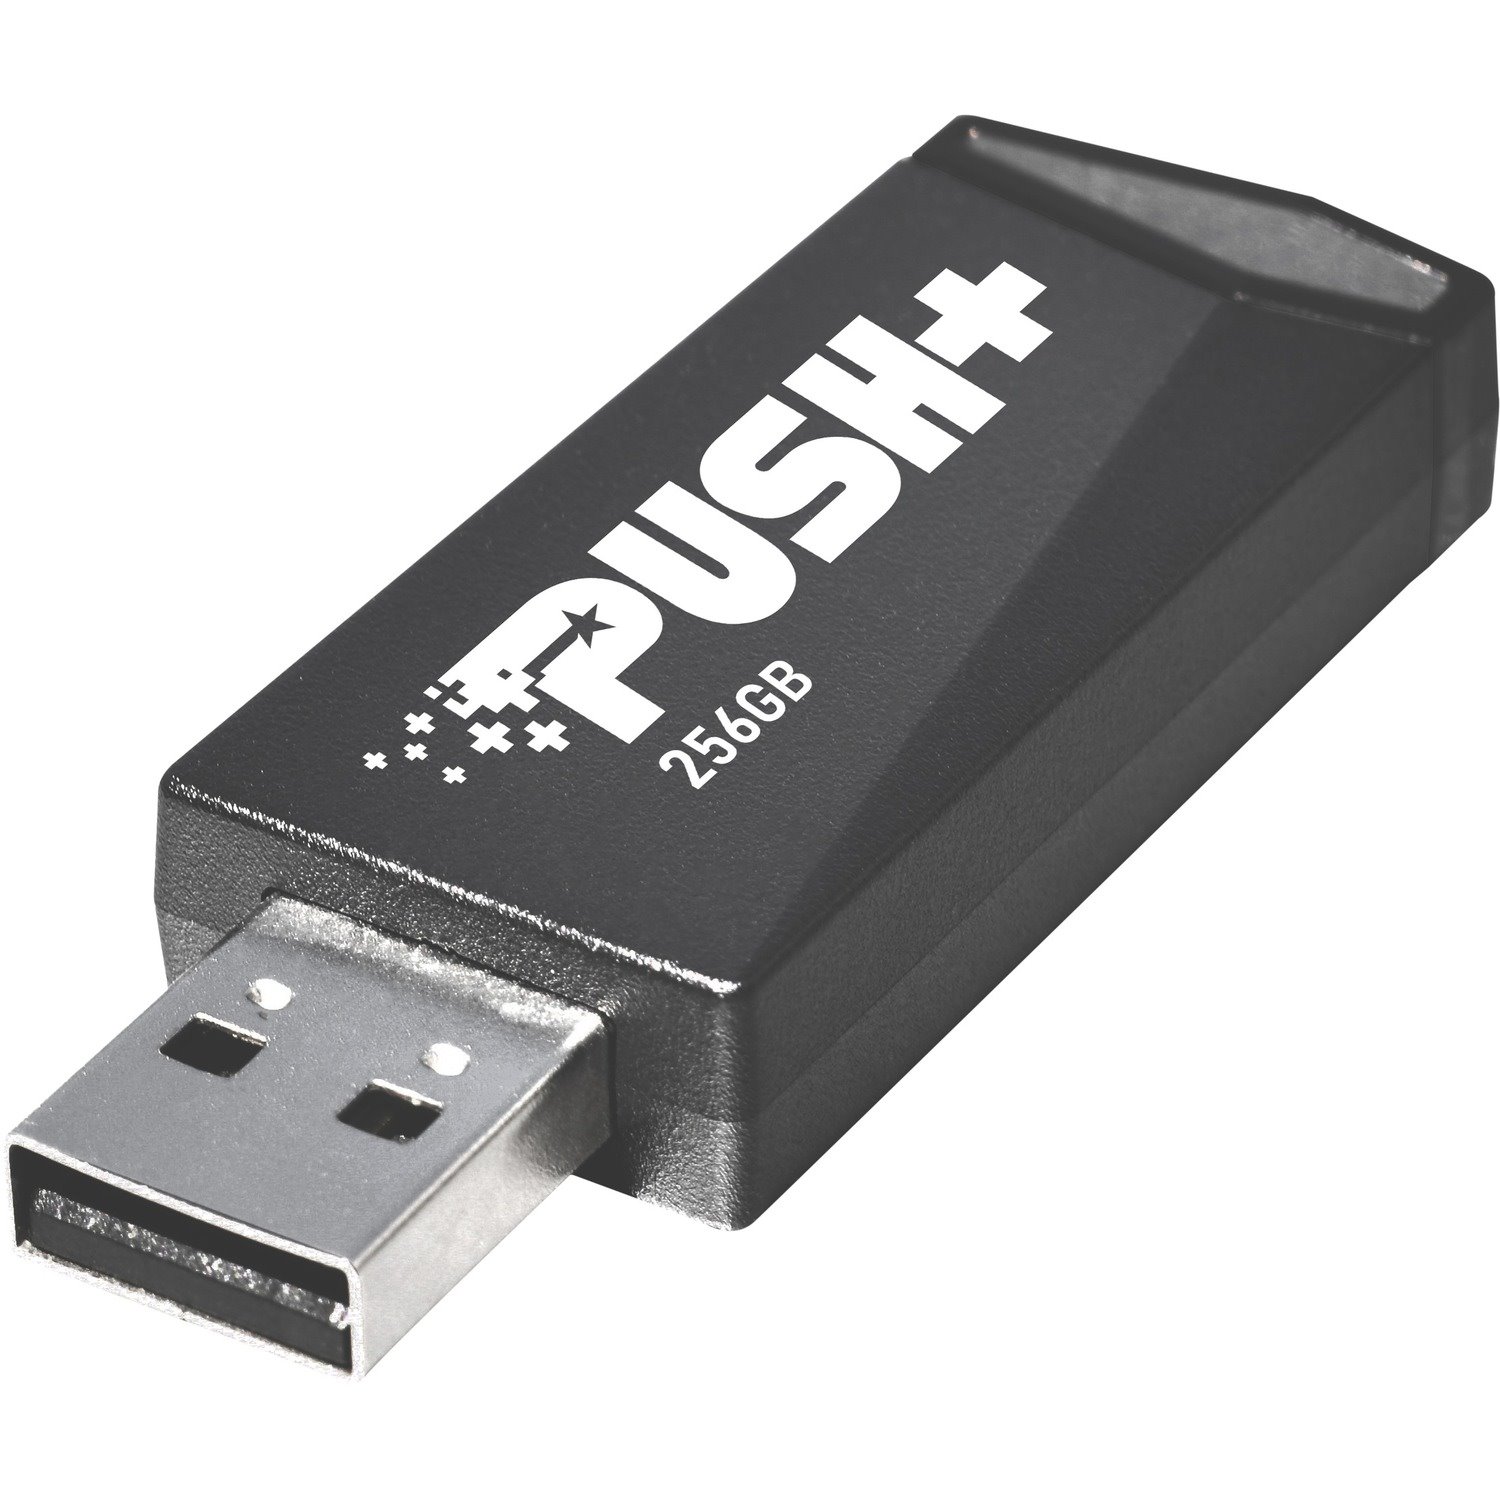 Patriot Memory Push+ USB 3.2 Gen. 1 Flash Drive